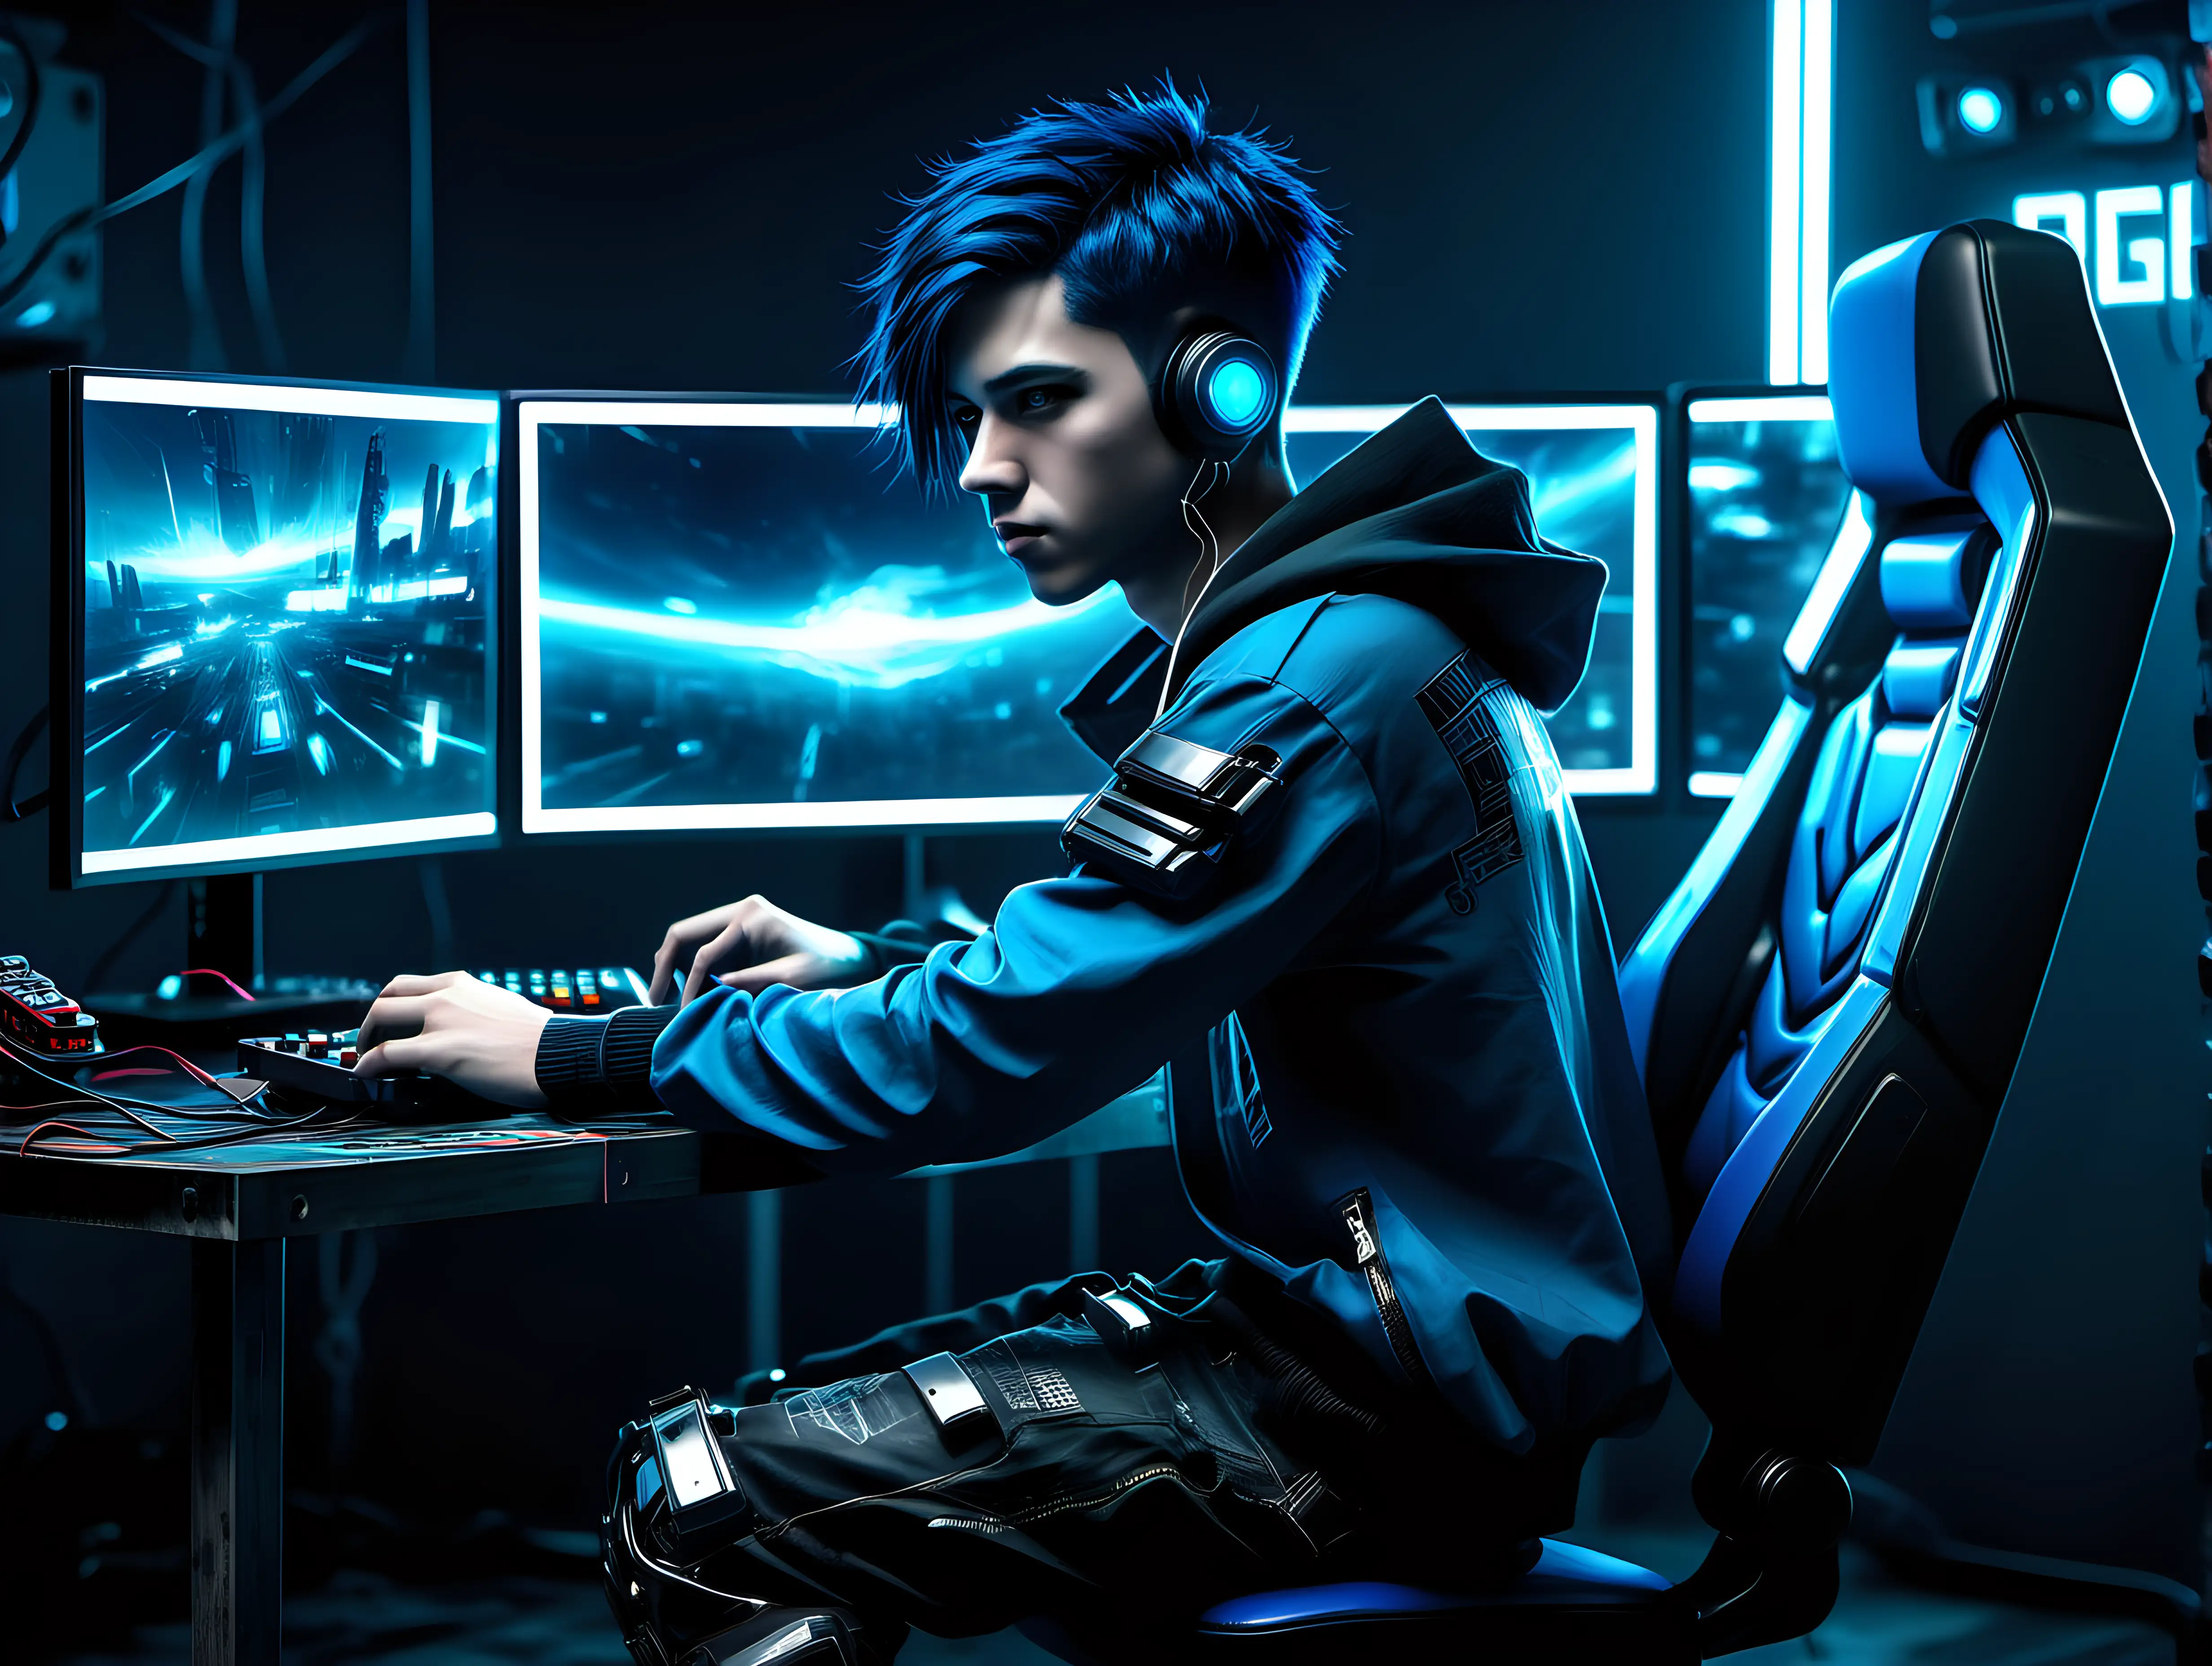 Create a cyberpunk boy with dark ocean blue short hair who is sitting infront a gamingsetup